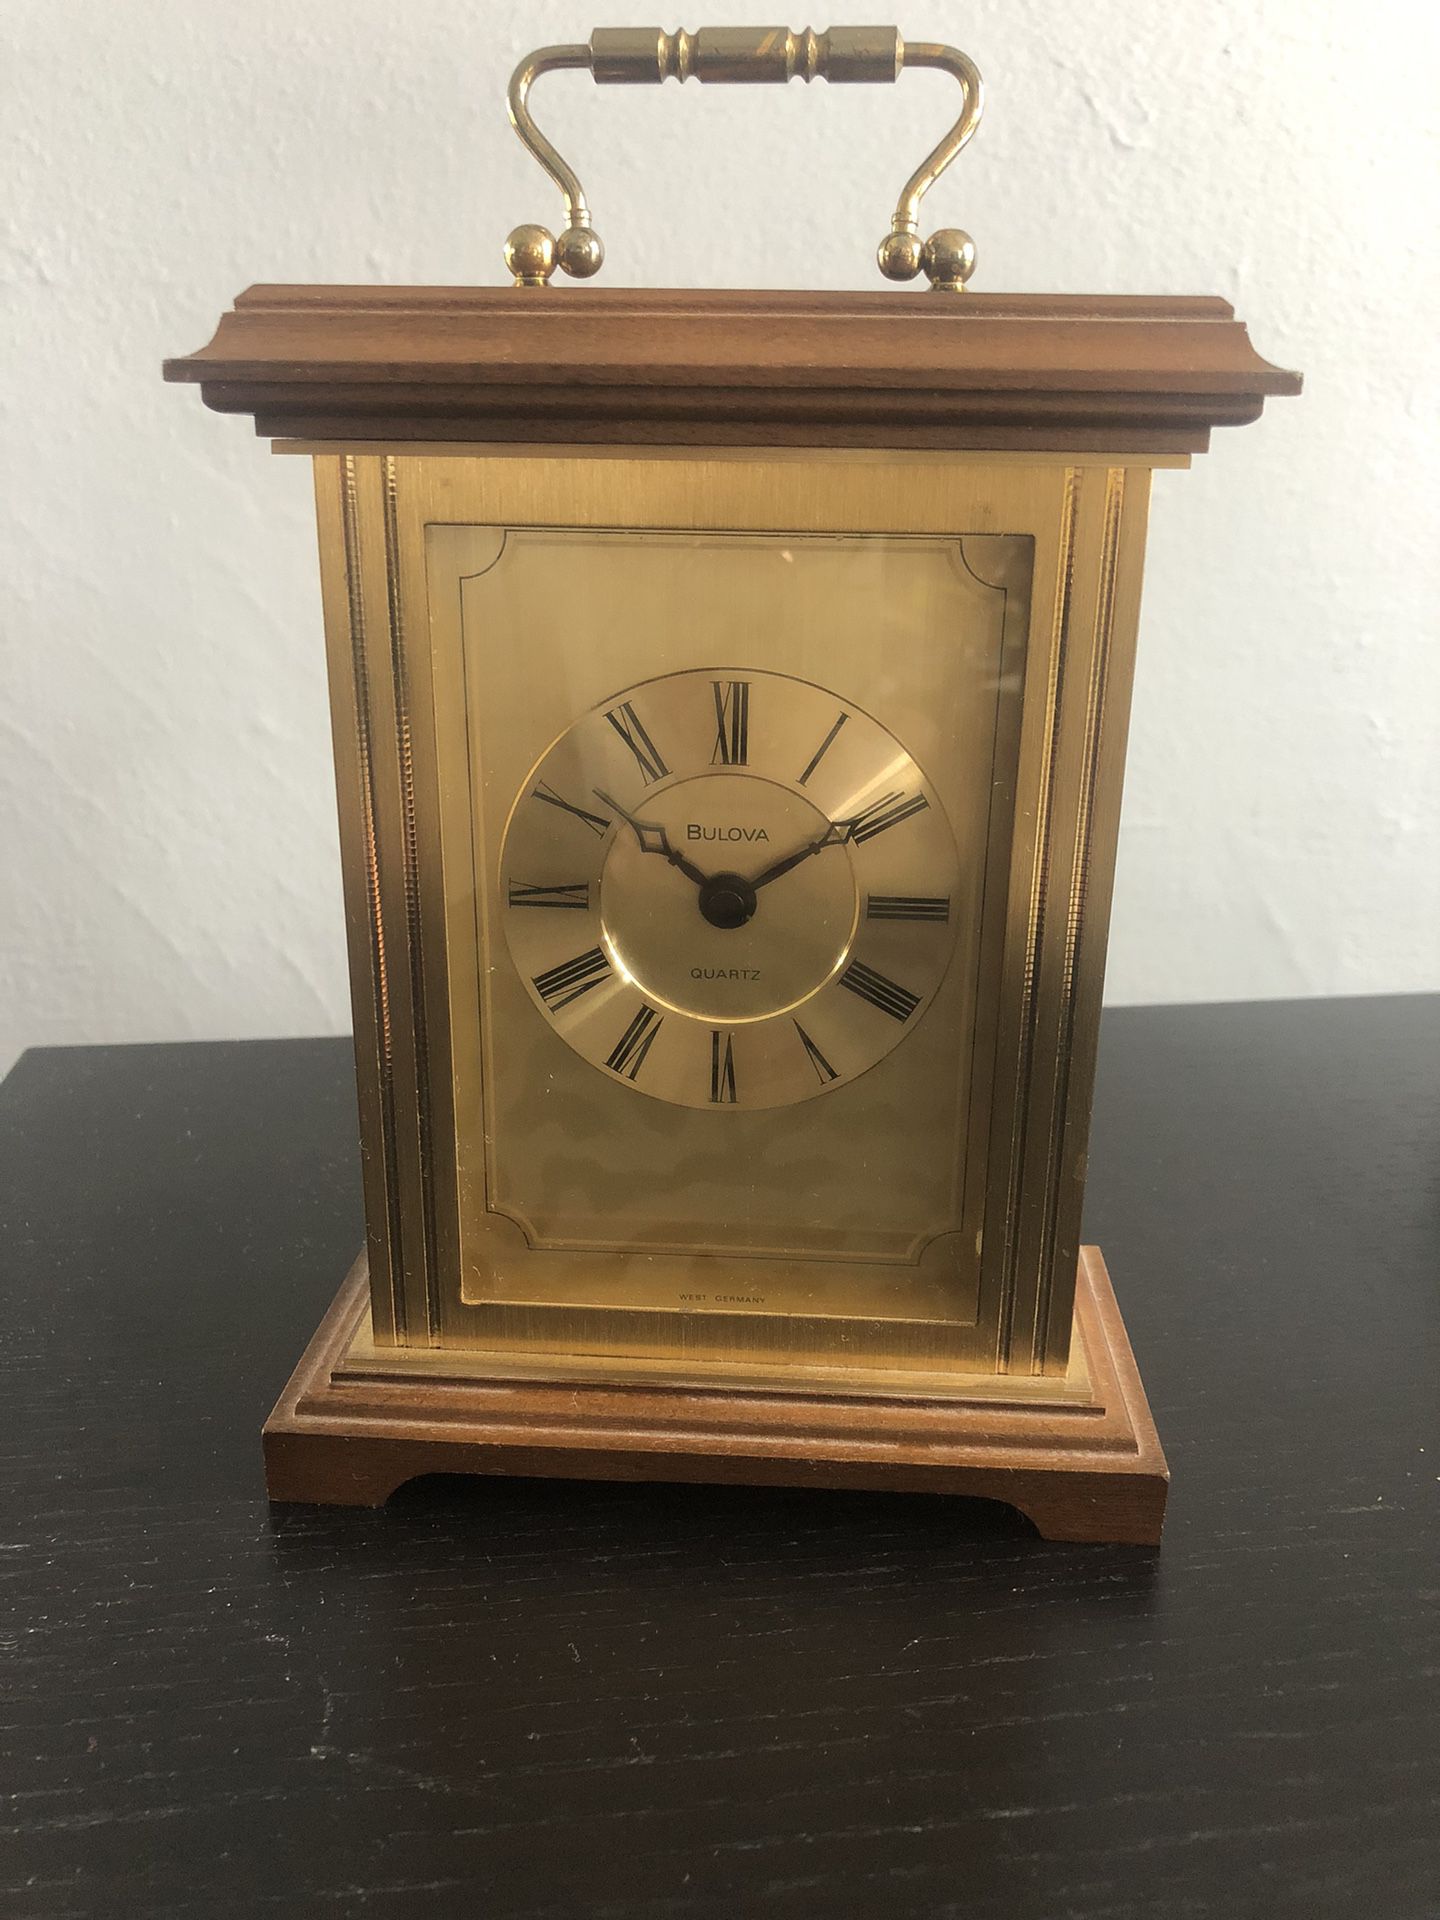 Mantle Clock Bulova Quartz Made in West Germany